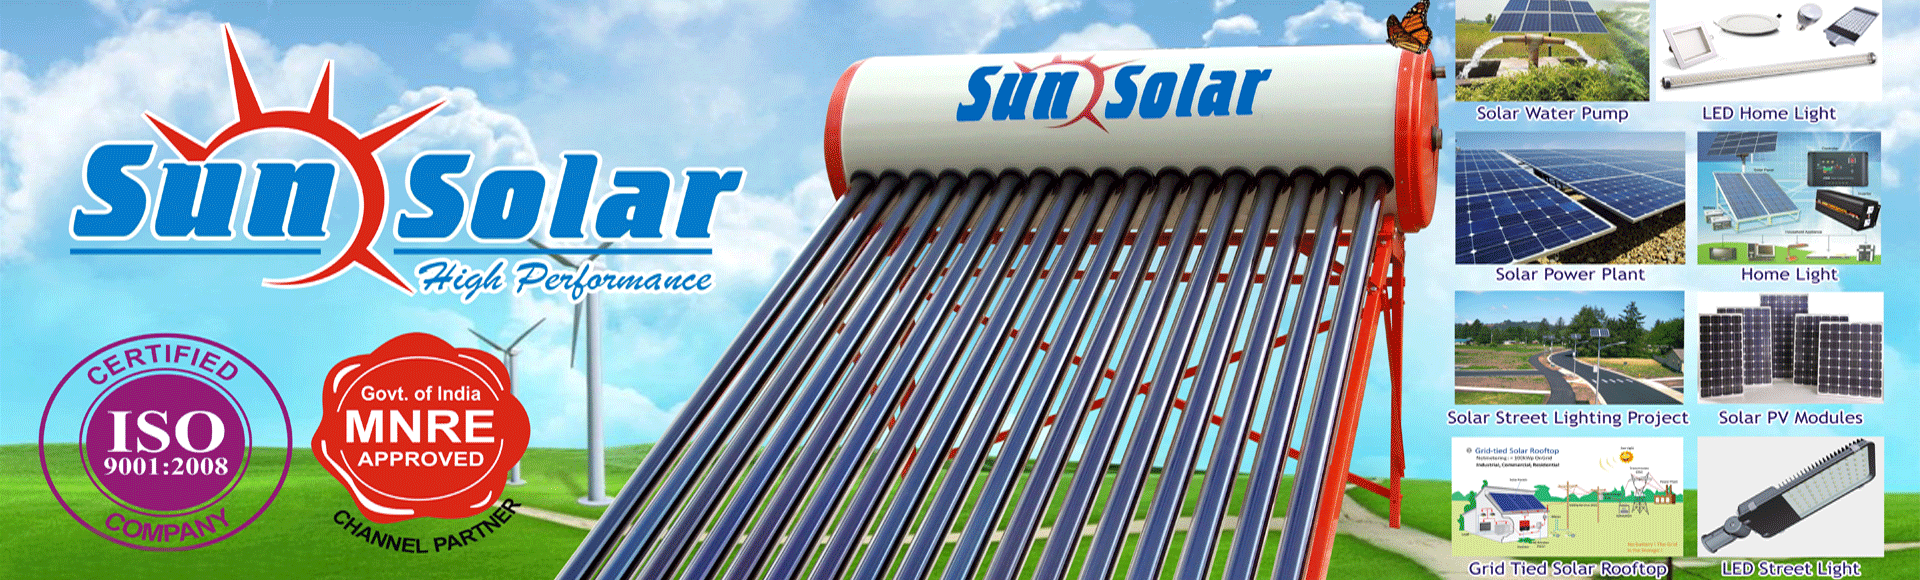 Top Sun Solar Products 